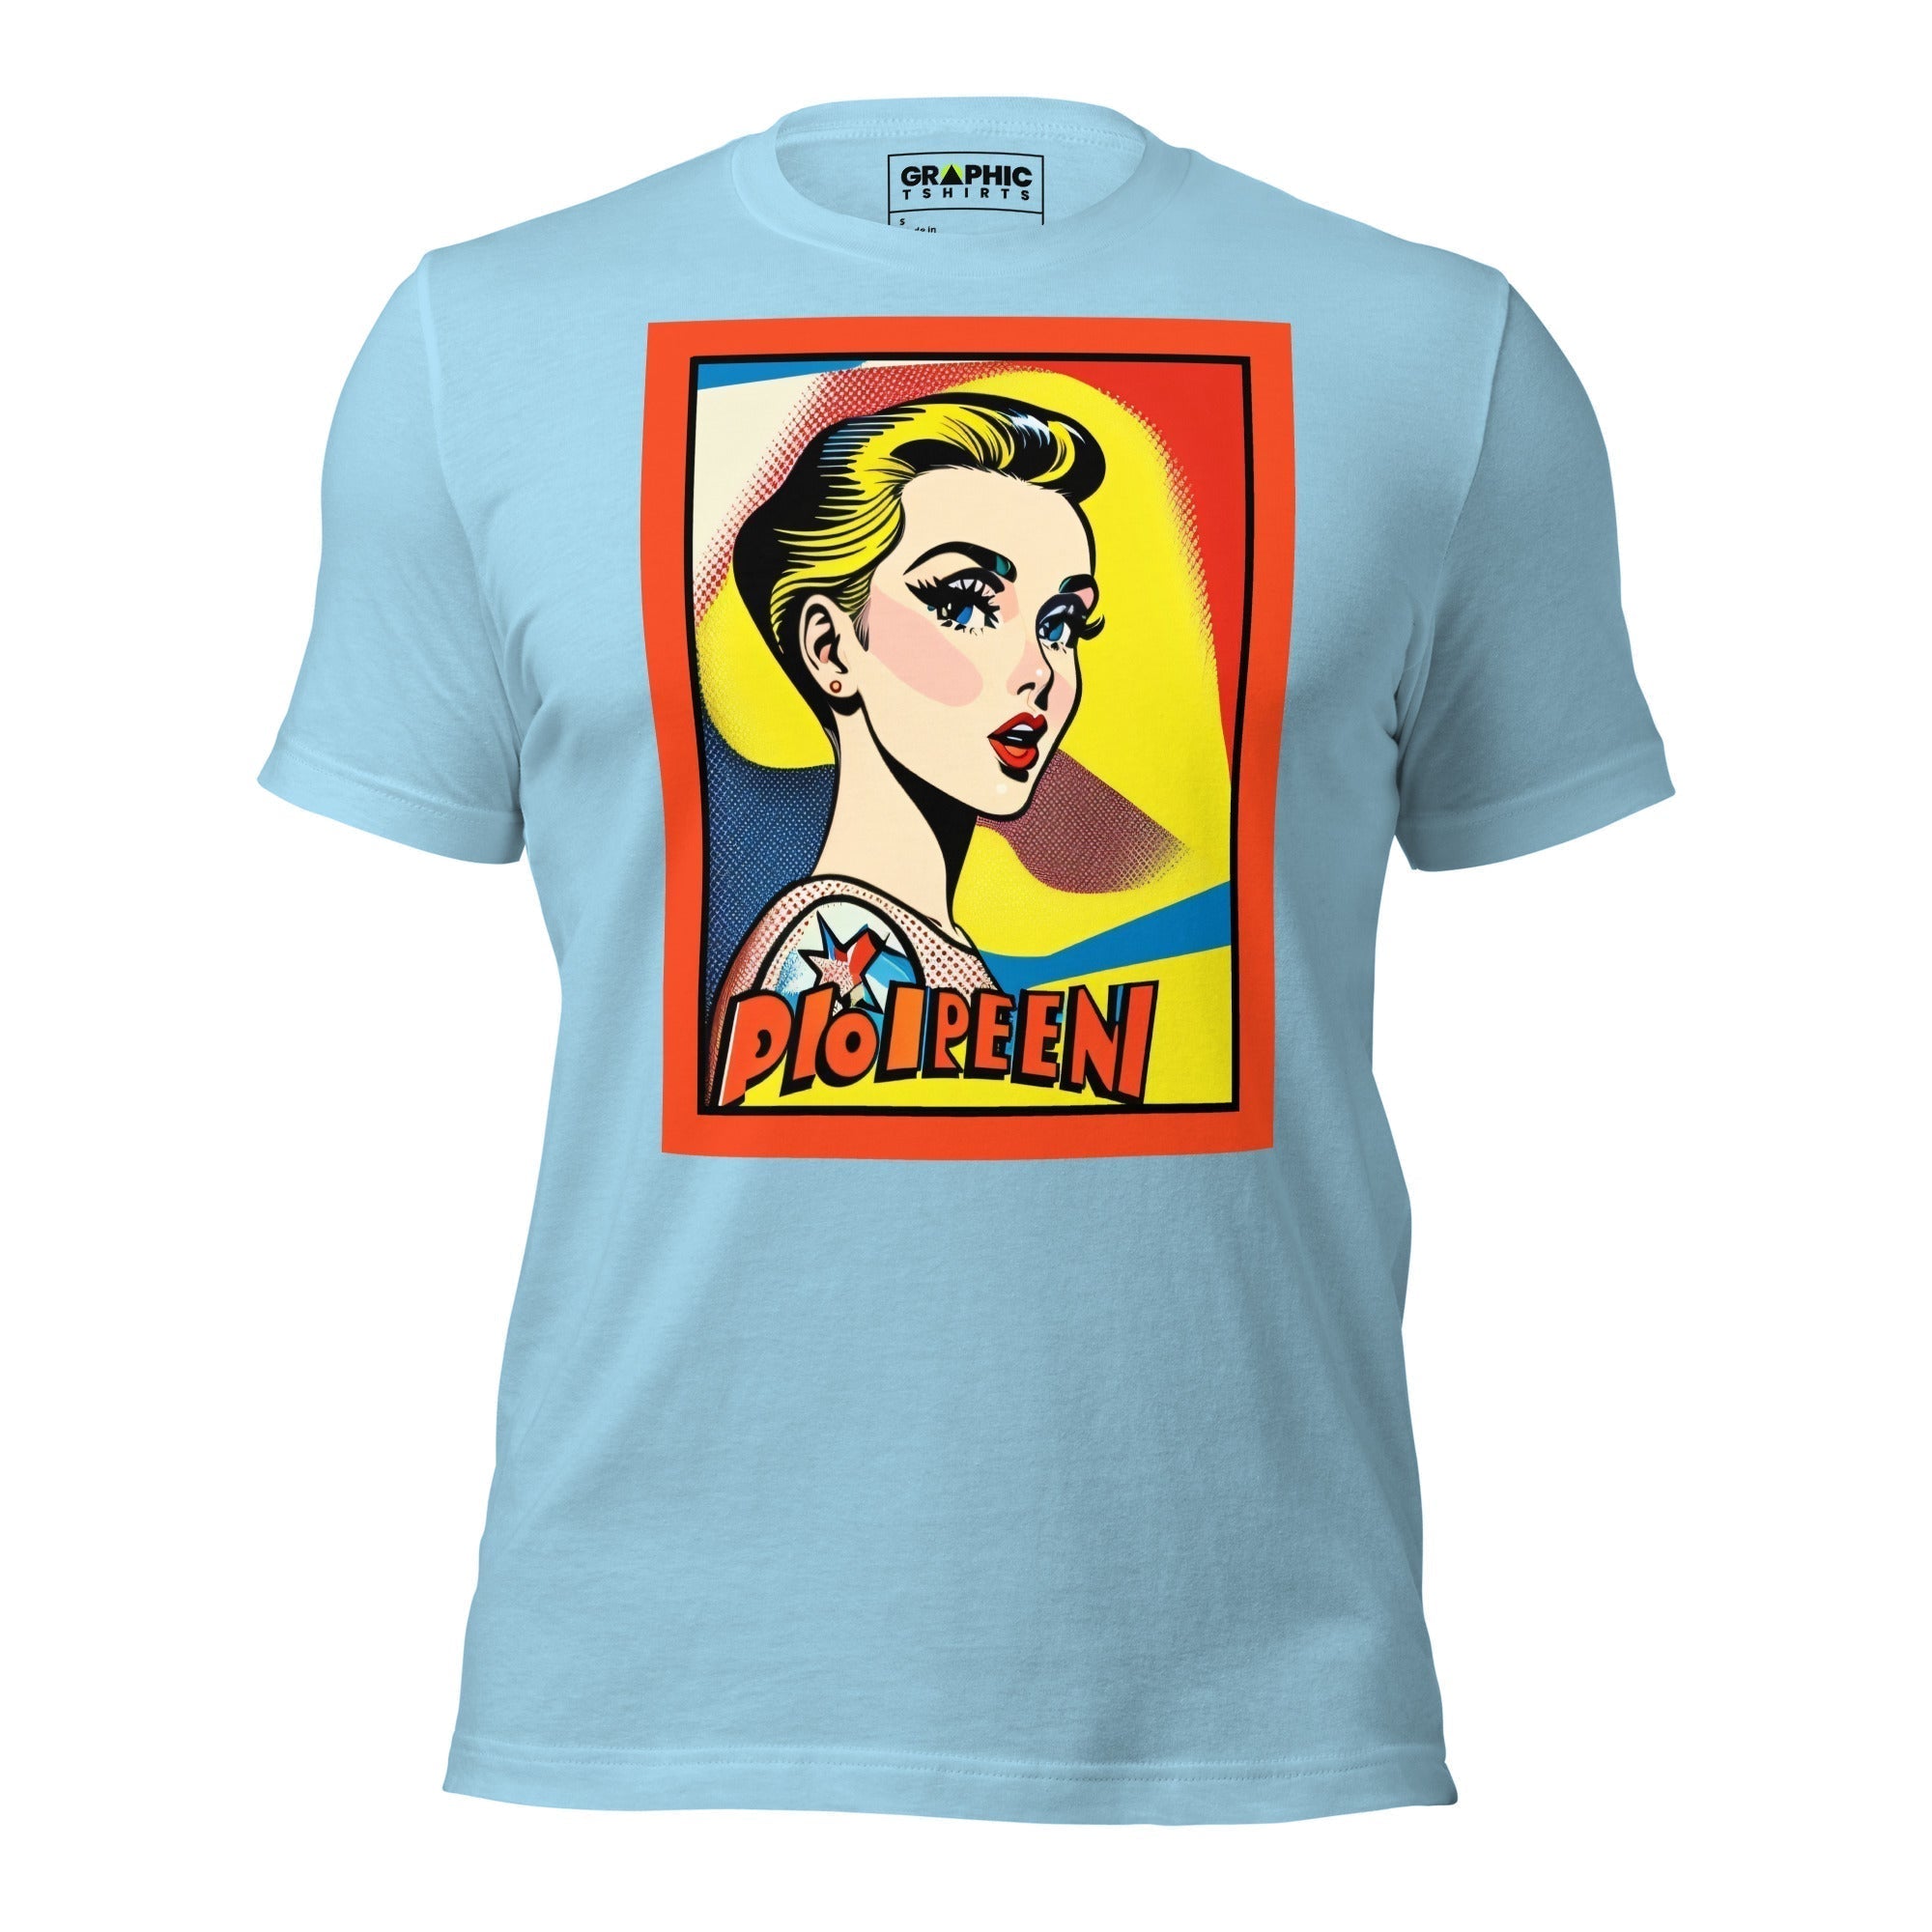 Unisex Crew Neck T-Shirt - Vintage American Comic Series v.18 - GRAPHIC T-SHIRTS